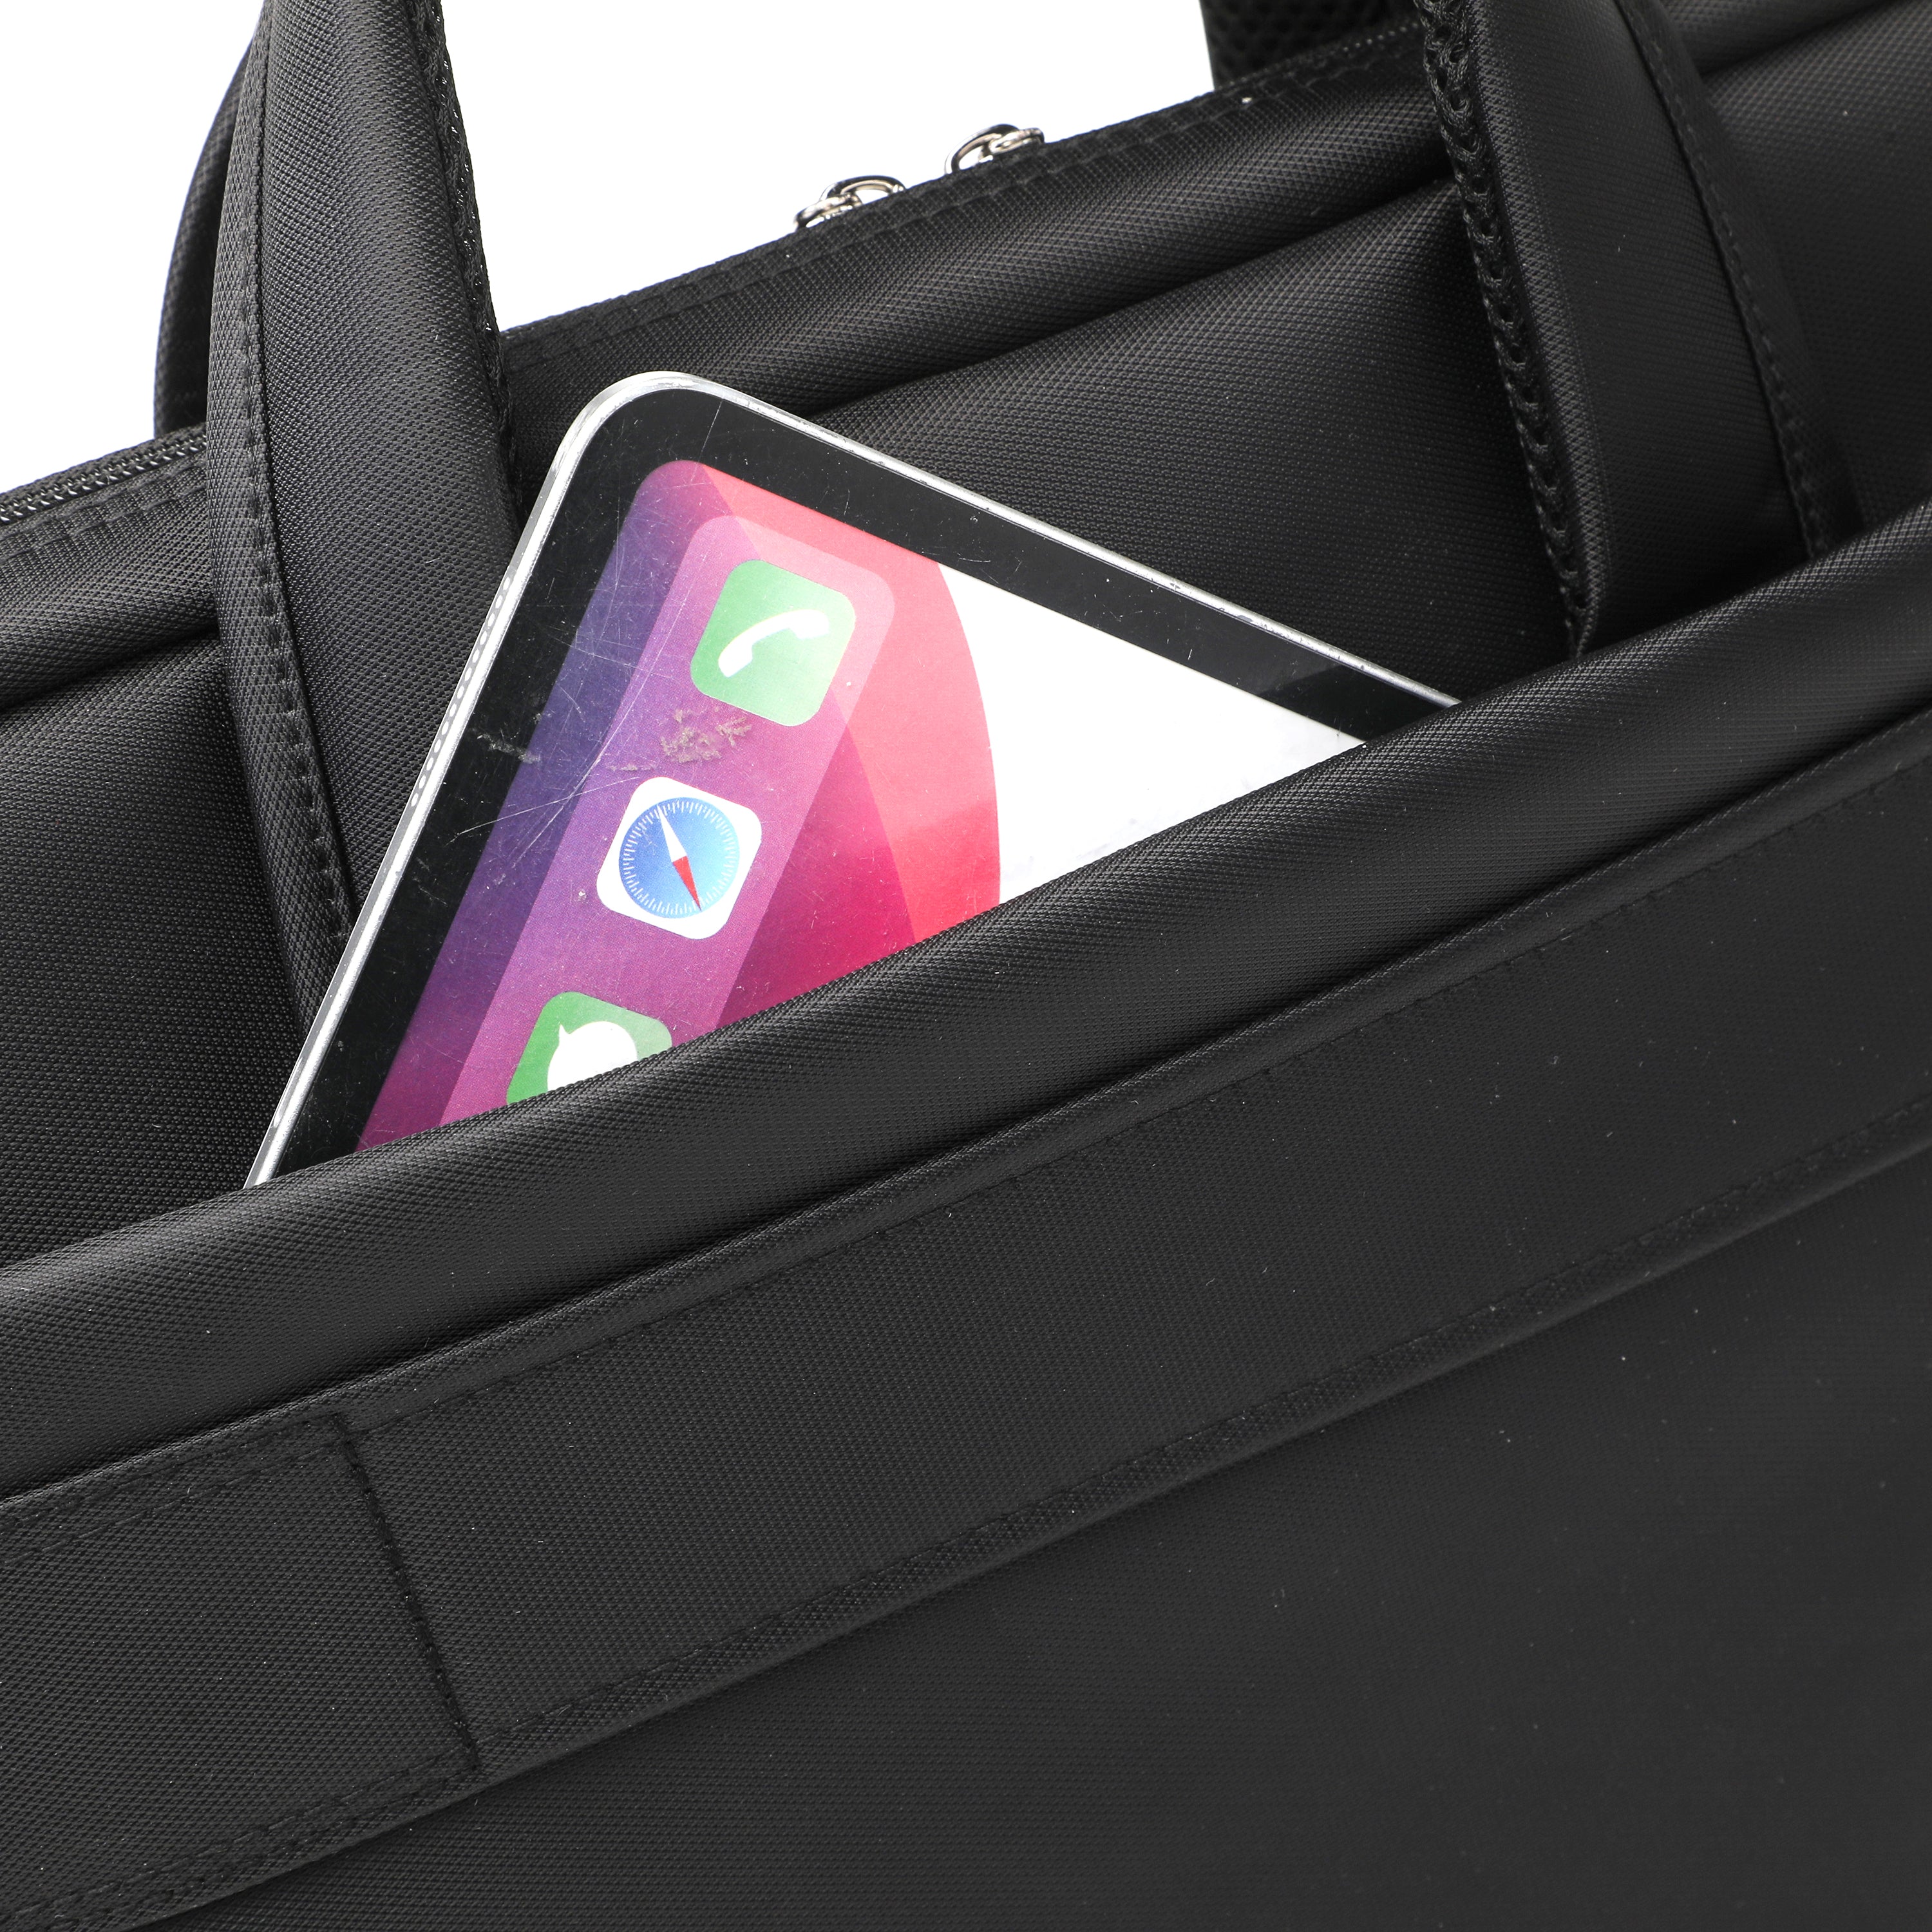 Senator 15 inch Nylon Shoulder Laptop Bag Light Weight Water Resistant with RFID pockets and Adjustable Shoulder Straps Business College School KH8115